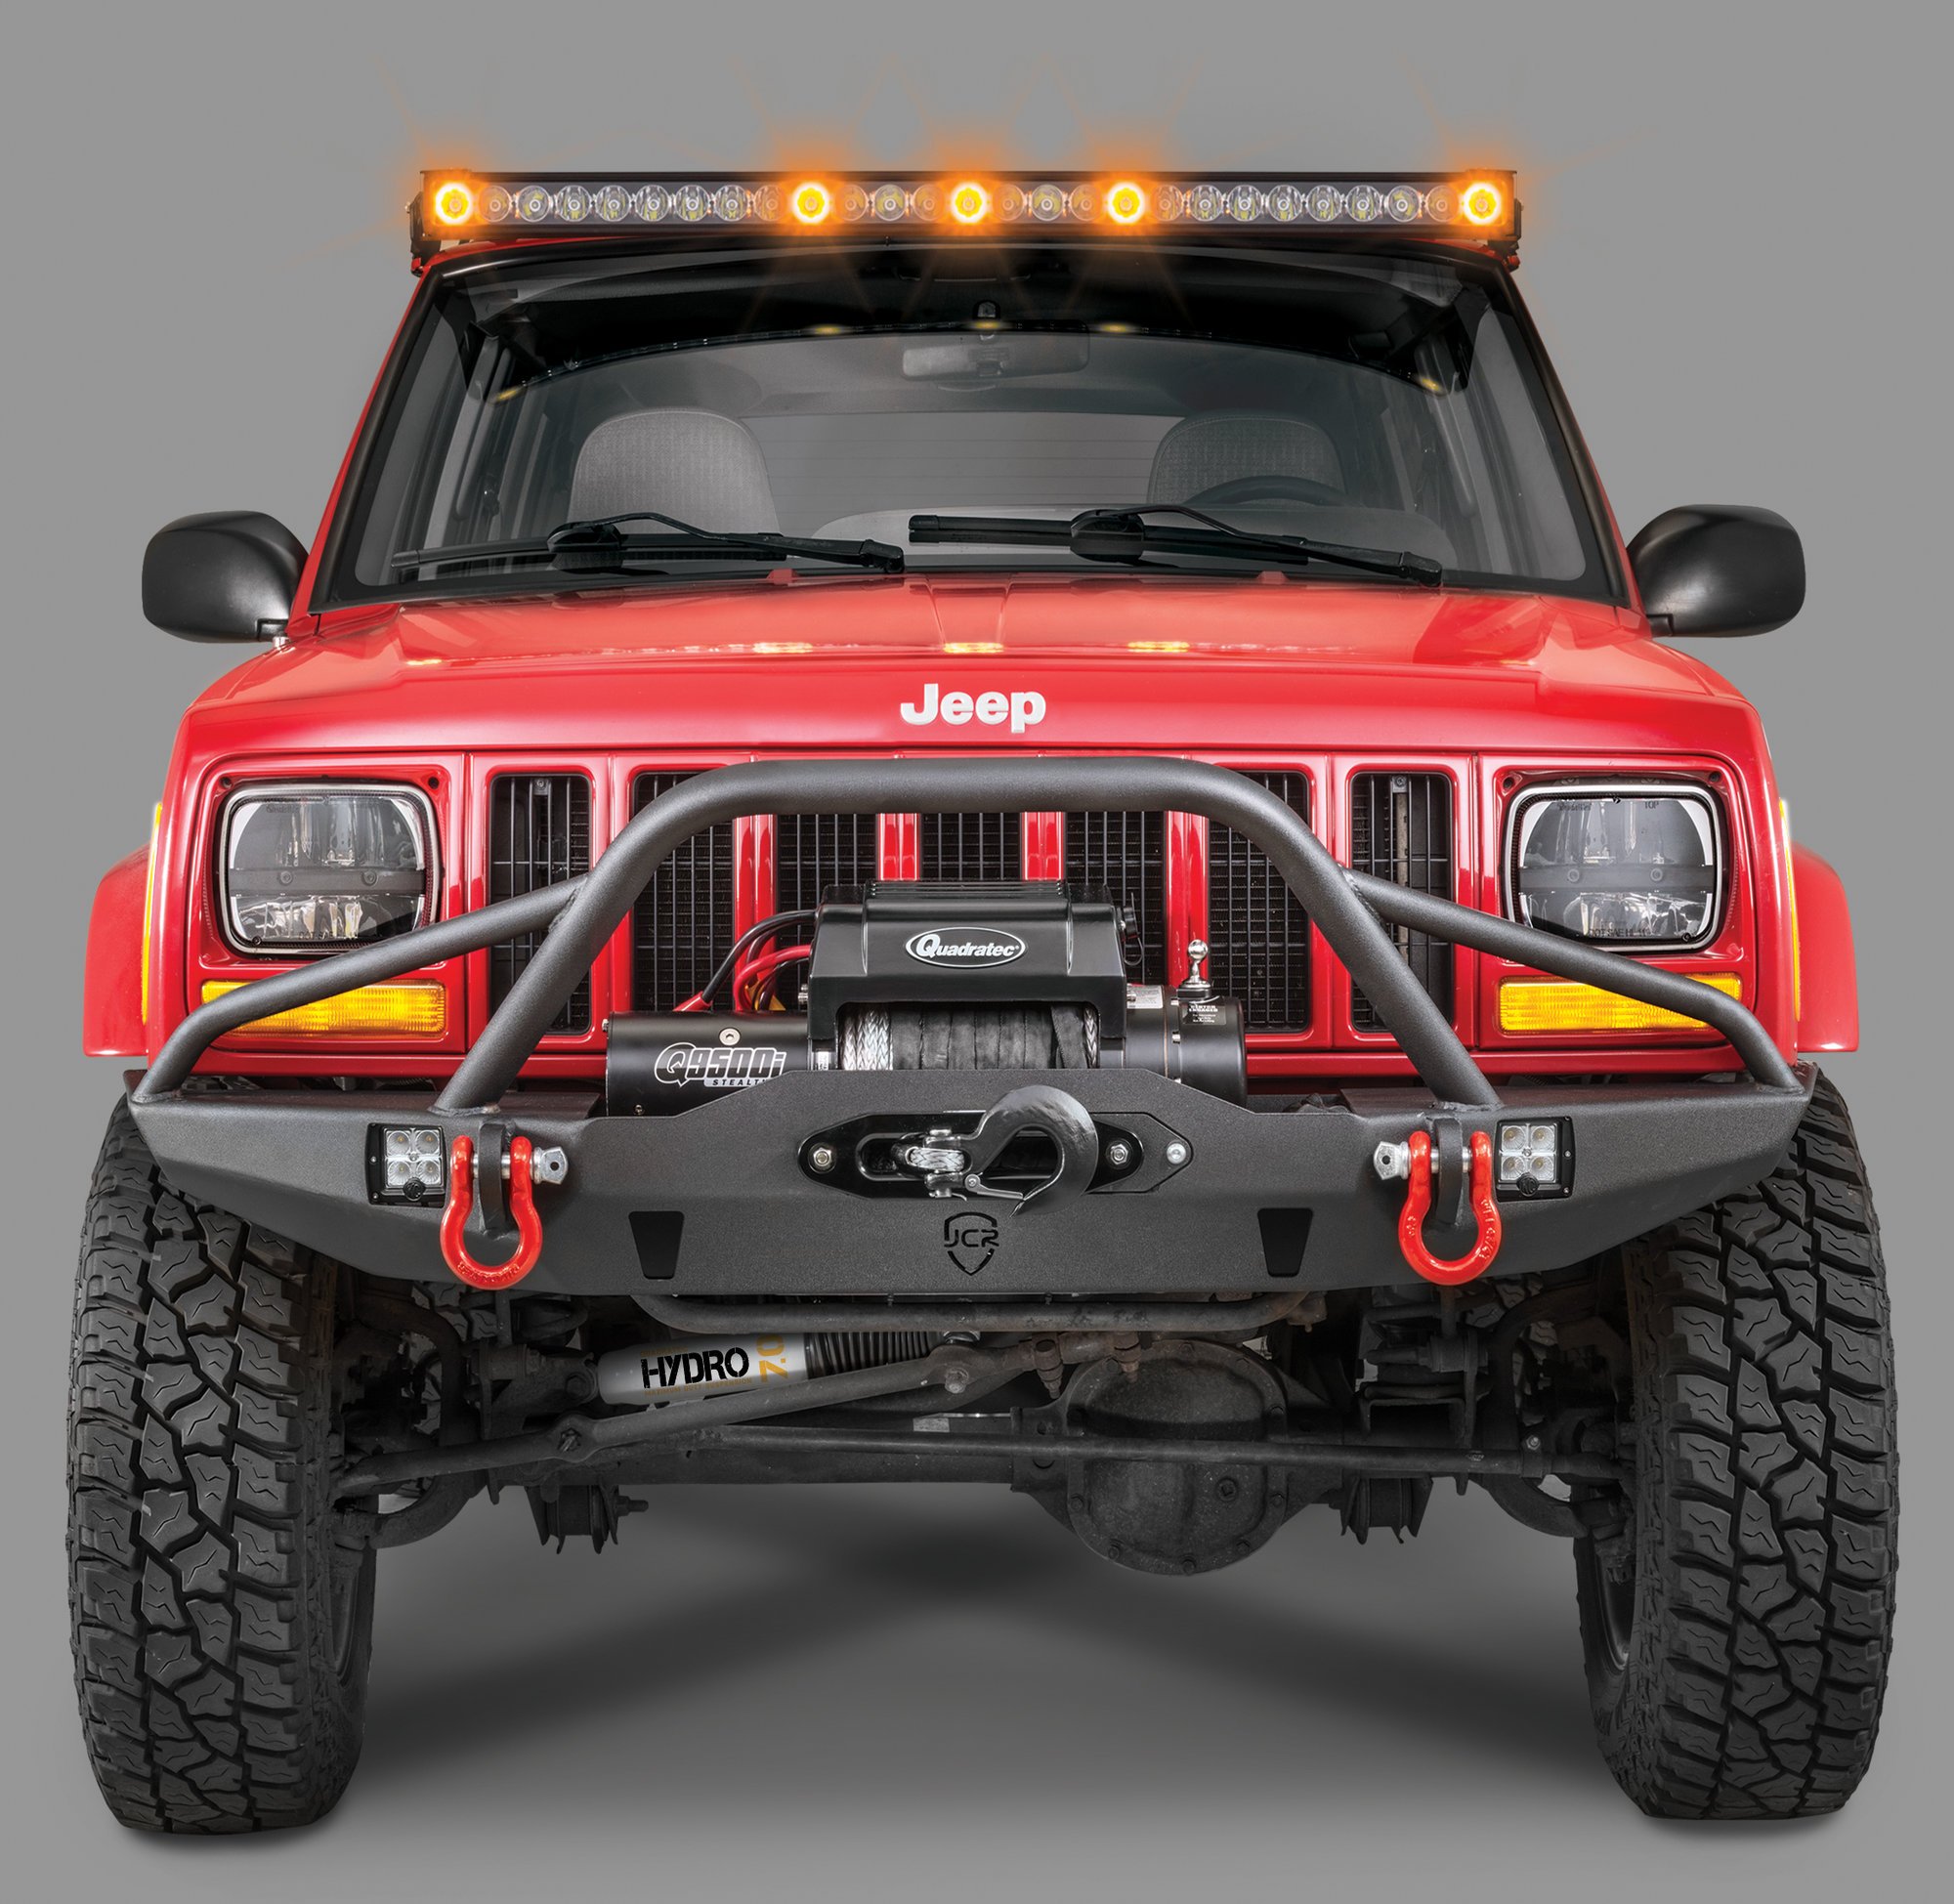 Jeep Roof Lights & Quadratec® J5 LED Light Bar Kit With